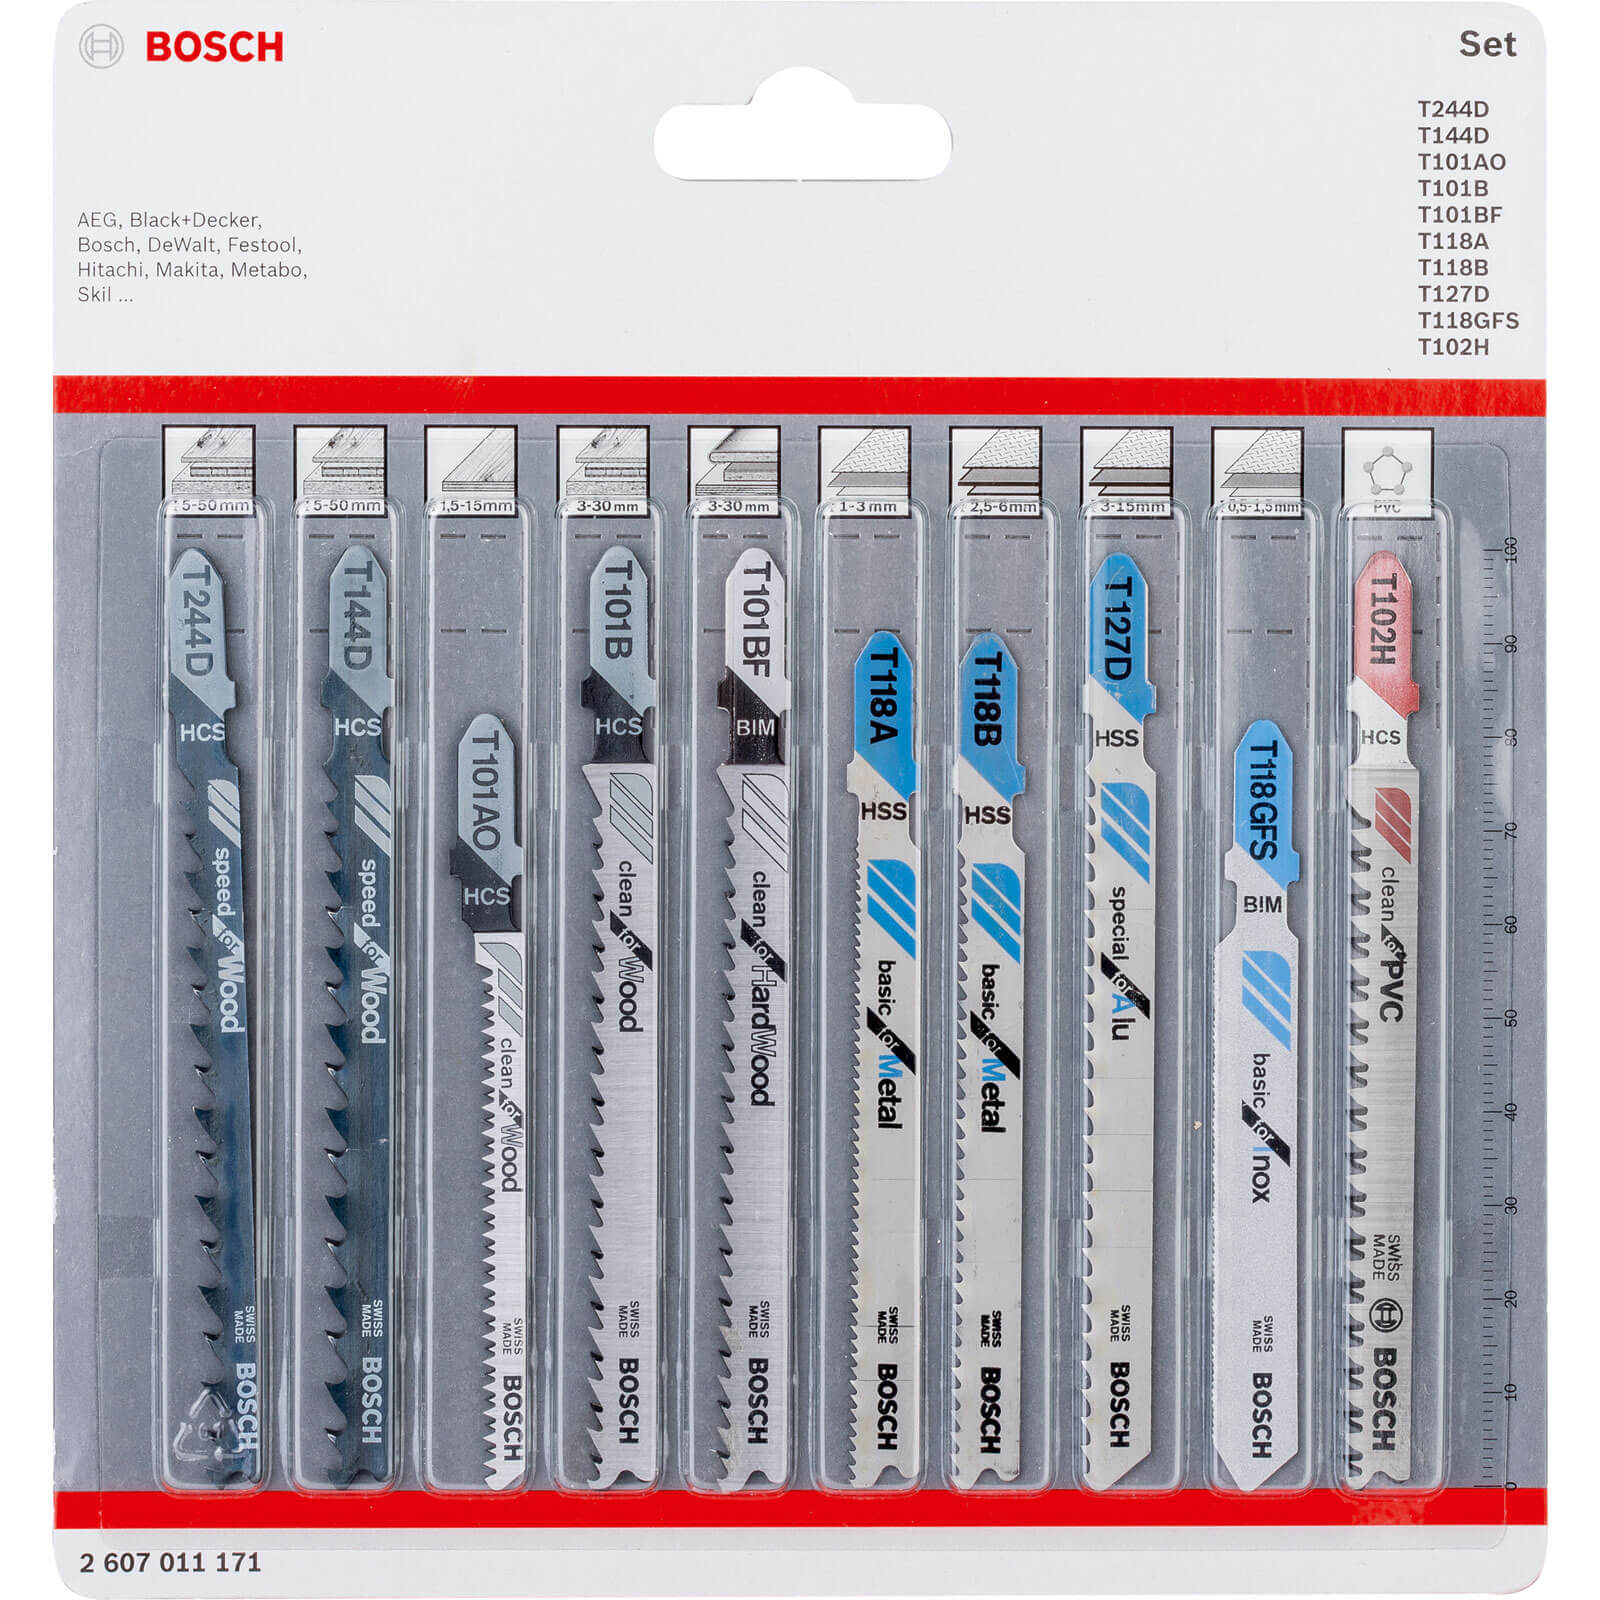 Photos - Power Tool Accessory Bosch 10 Piece Multi Purpose Jigsaw Blade set 